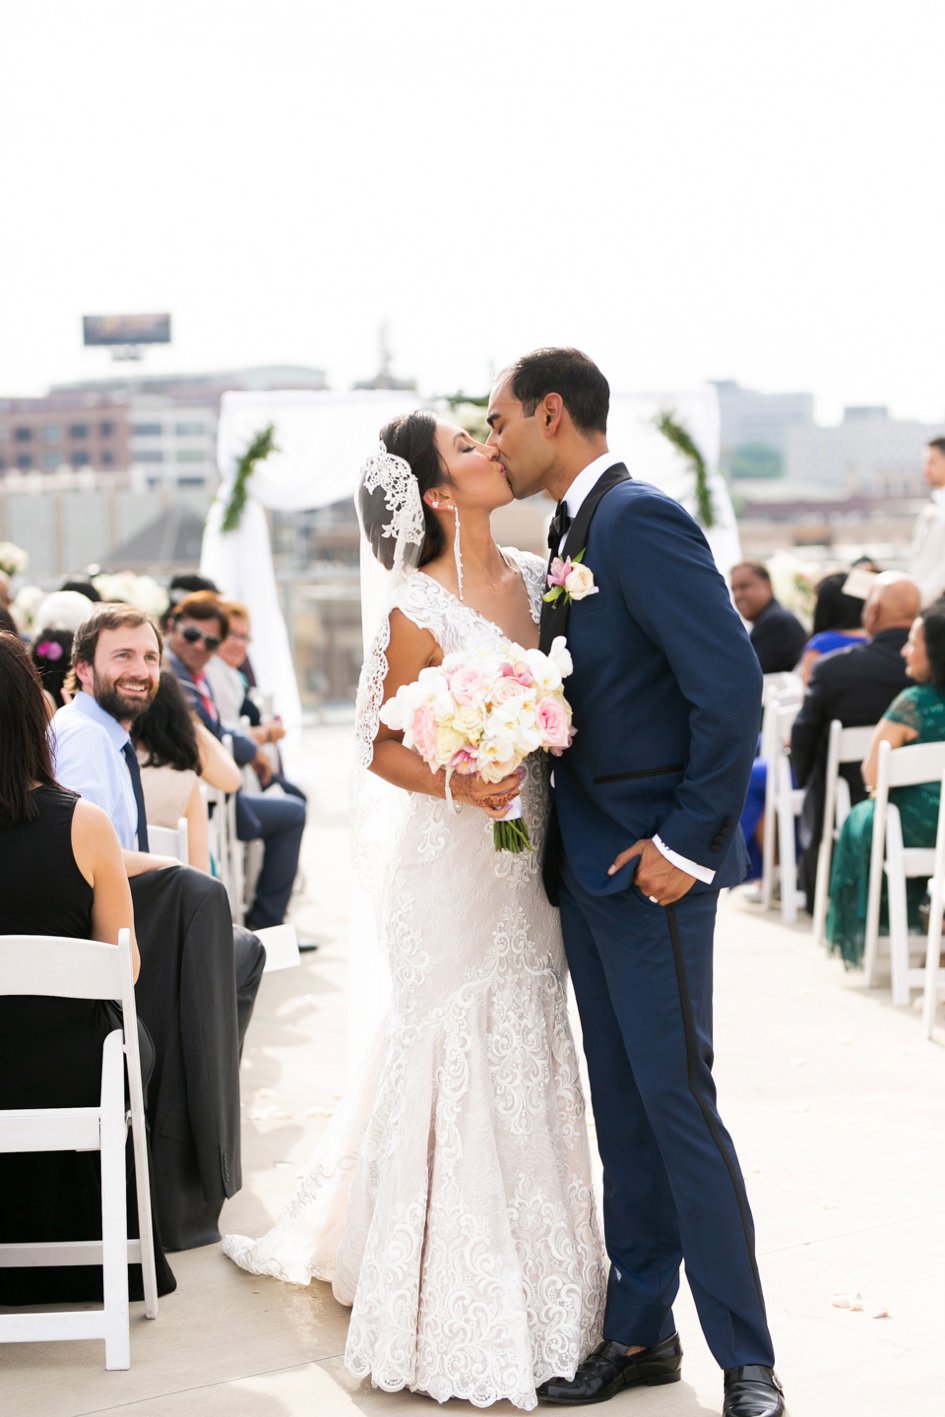 Two-Day Wedding Celebration at The Landmark Center & A’bulae | Minnesota Bride